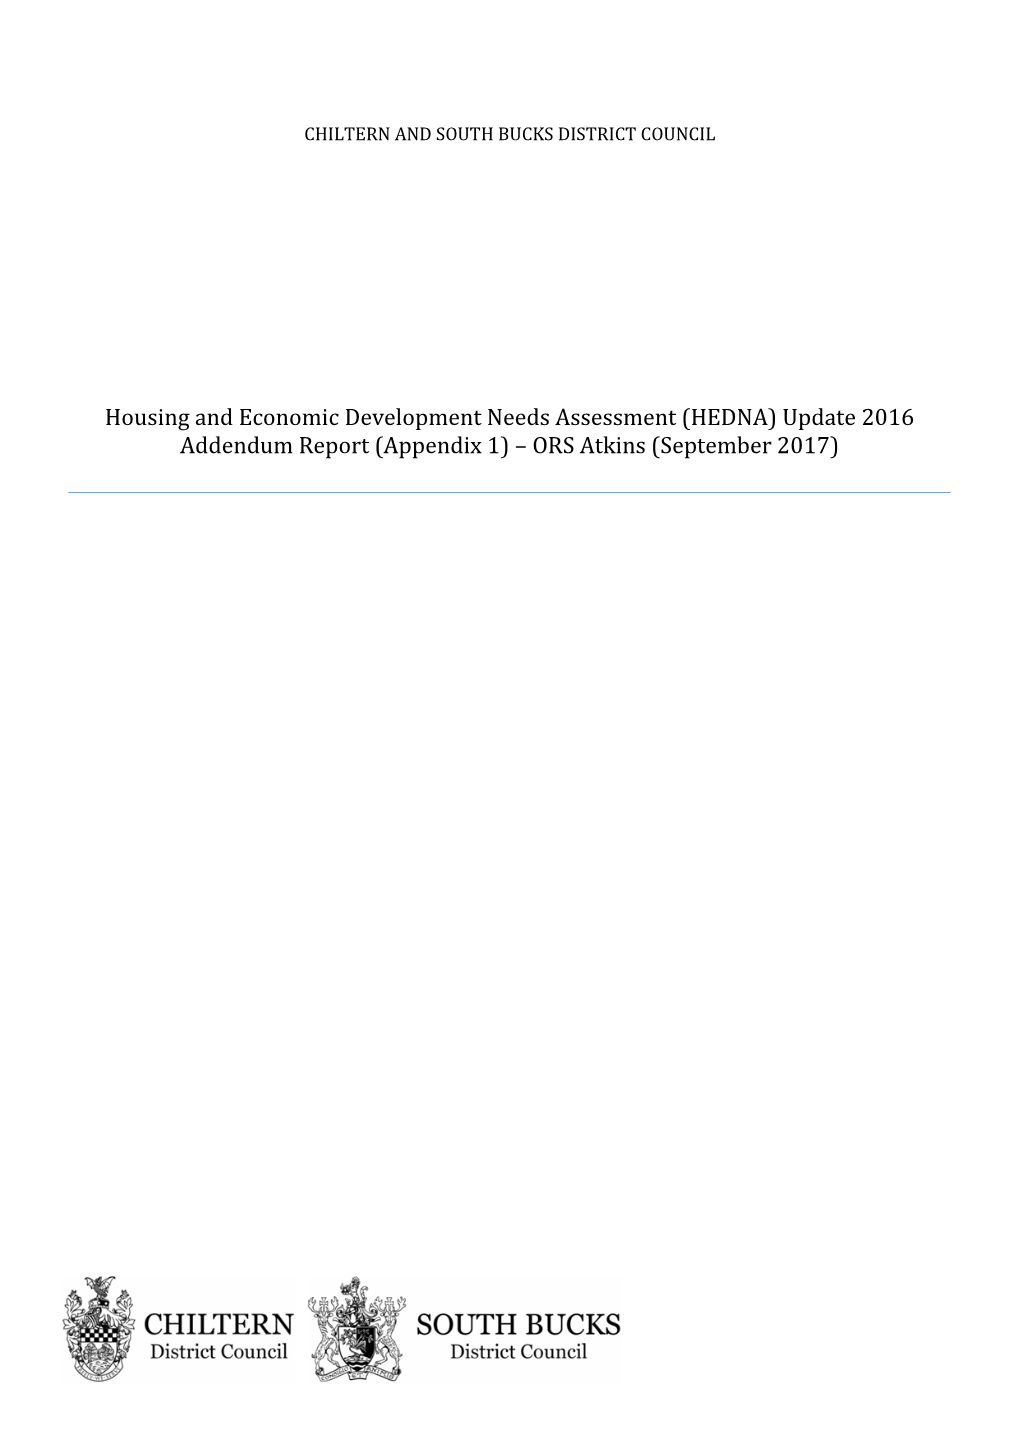 Housing and Economic Development Needs Assessment (HEDNA) Update 2016 Addendum Report (Appendix 1) – ORS Atkins (September 2017)